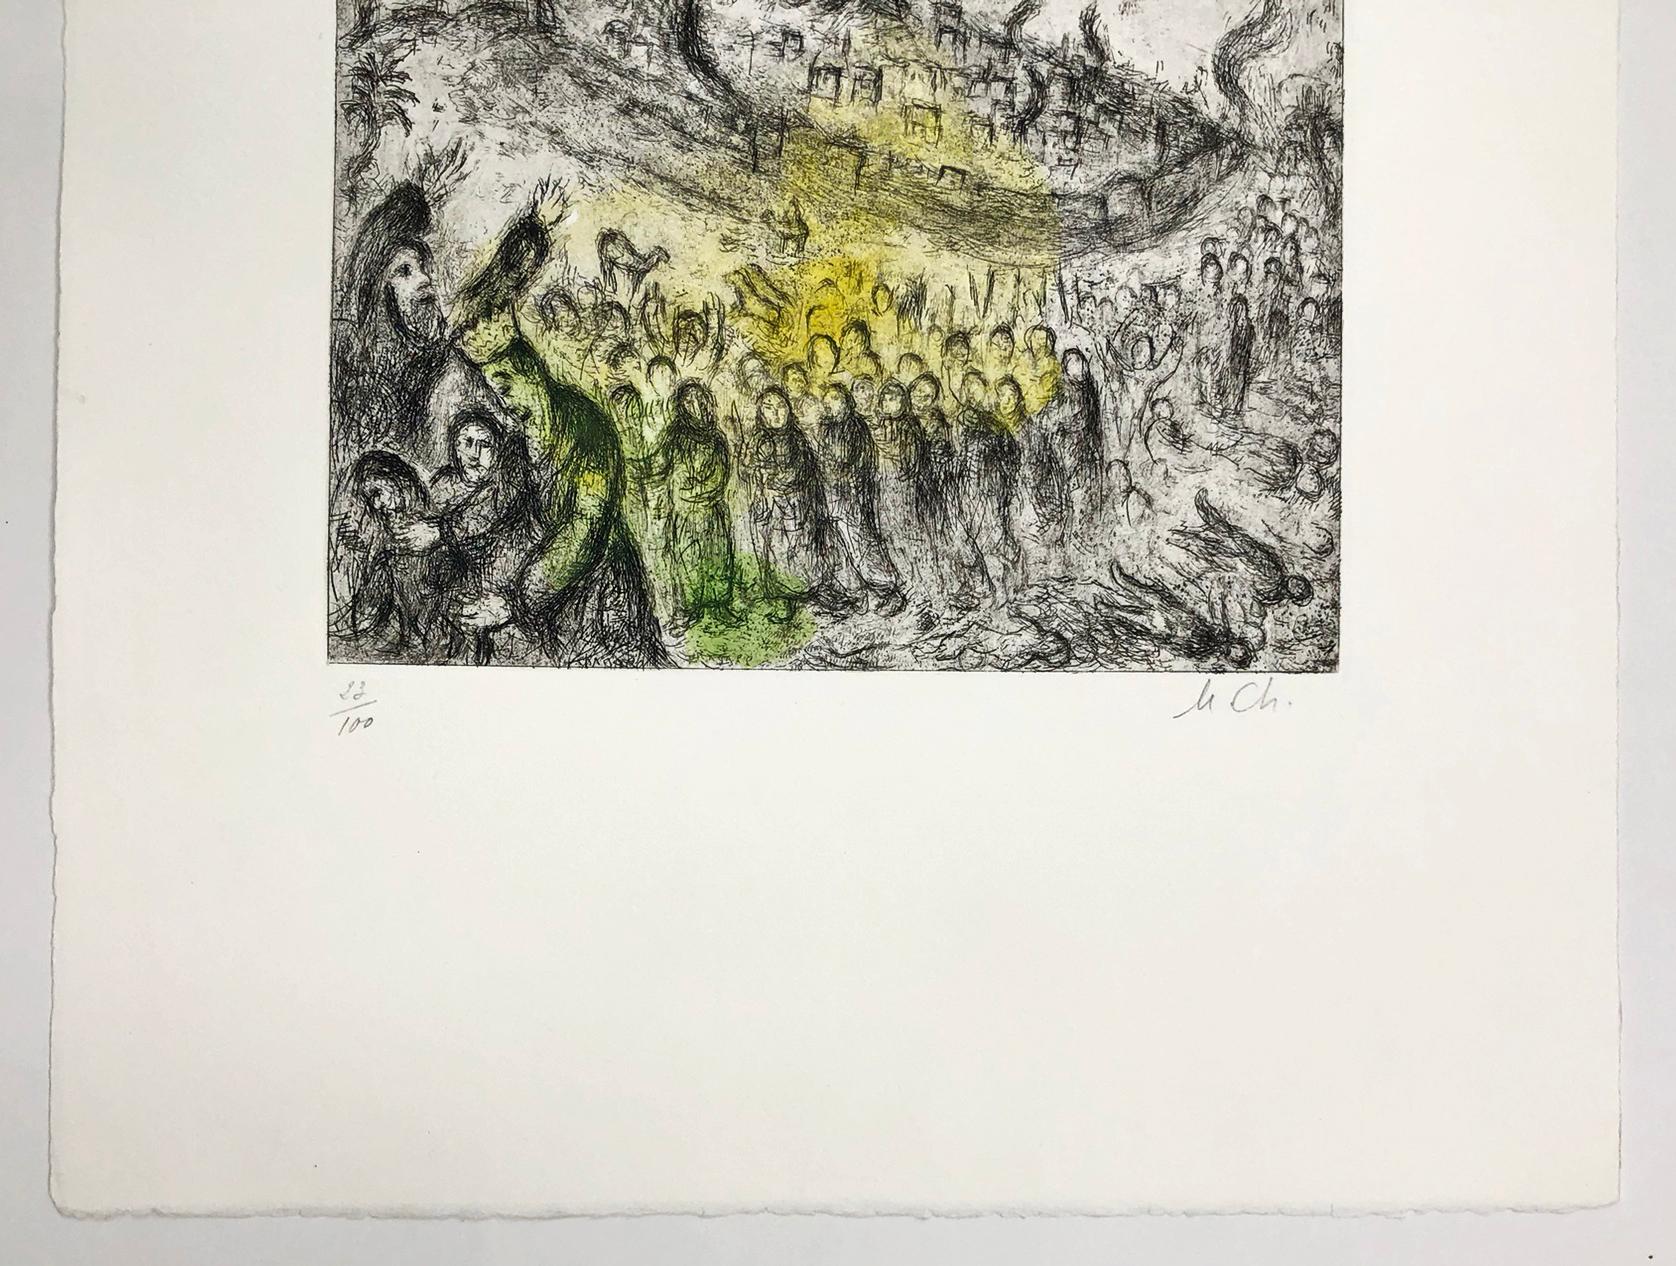 PRISE DE JERUSALEM (CRAMER 30) - Print by Marc Chagall